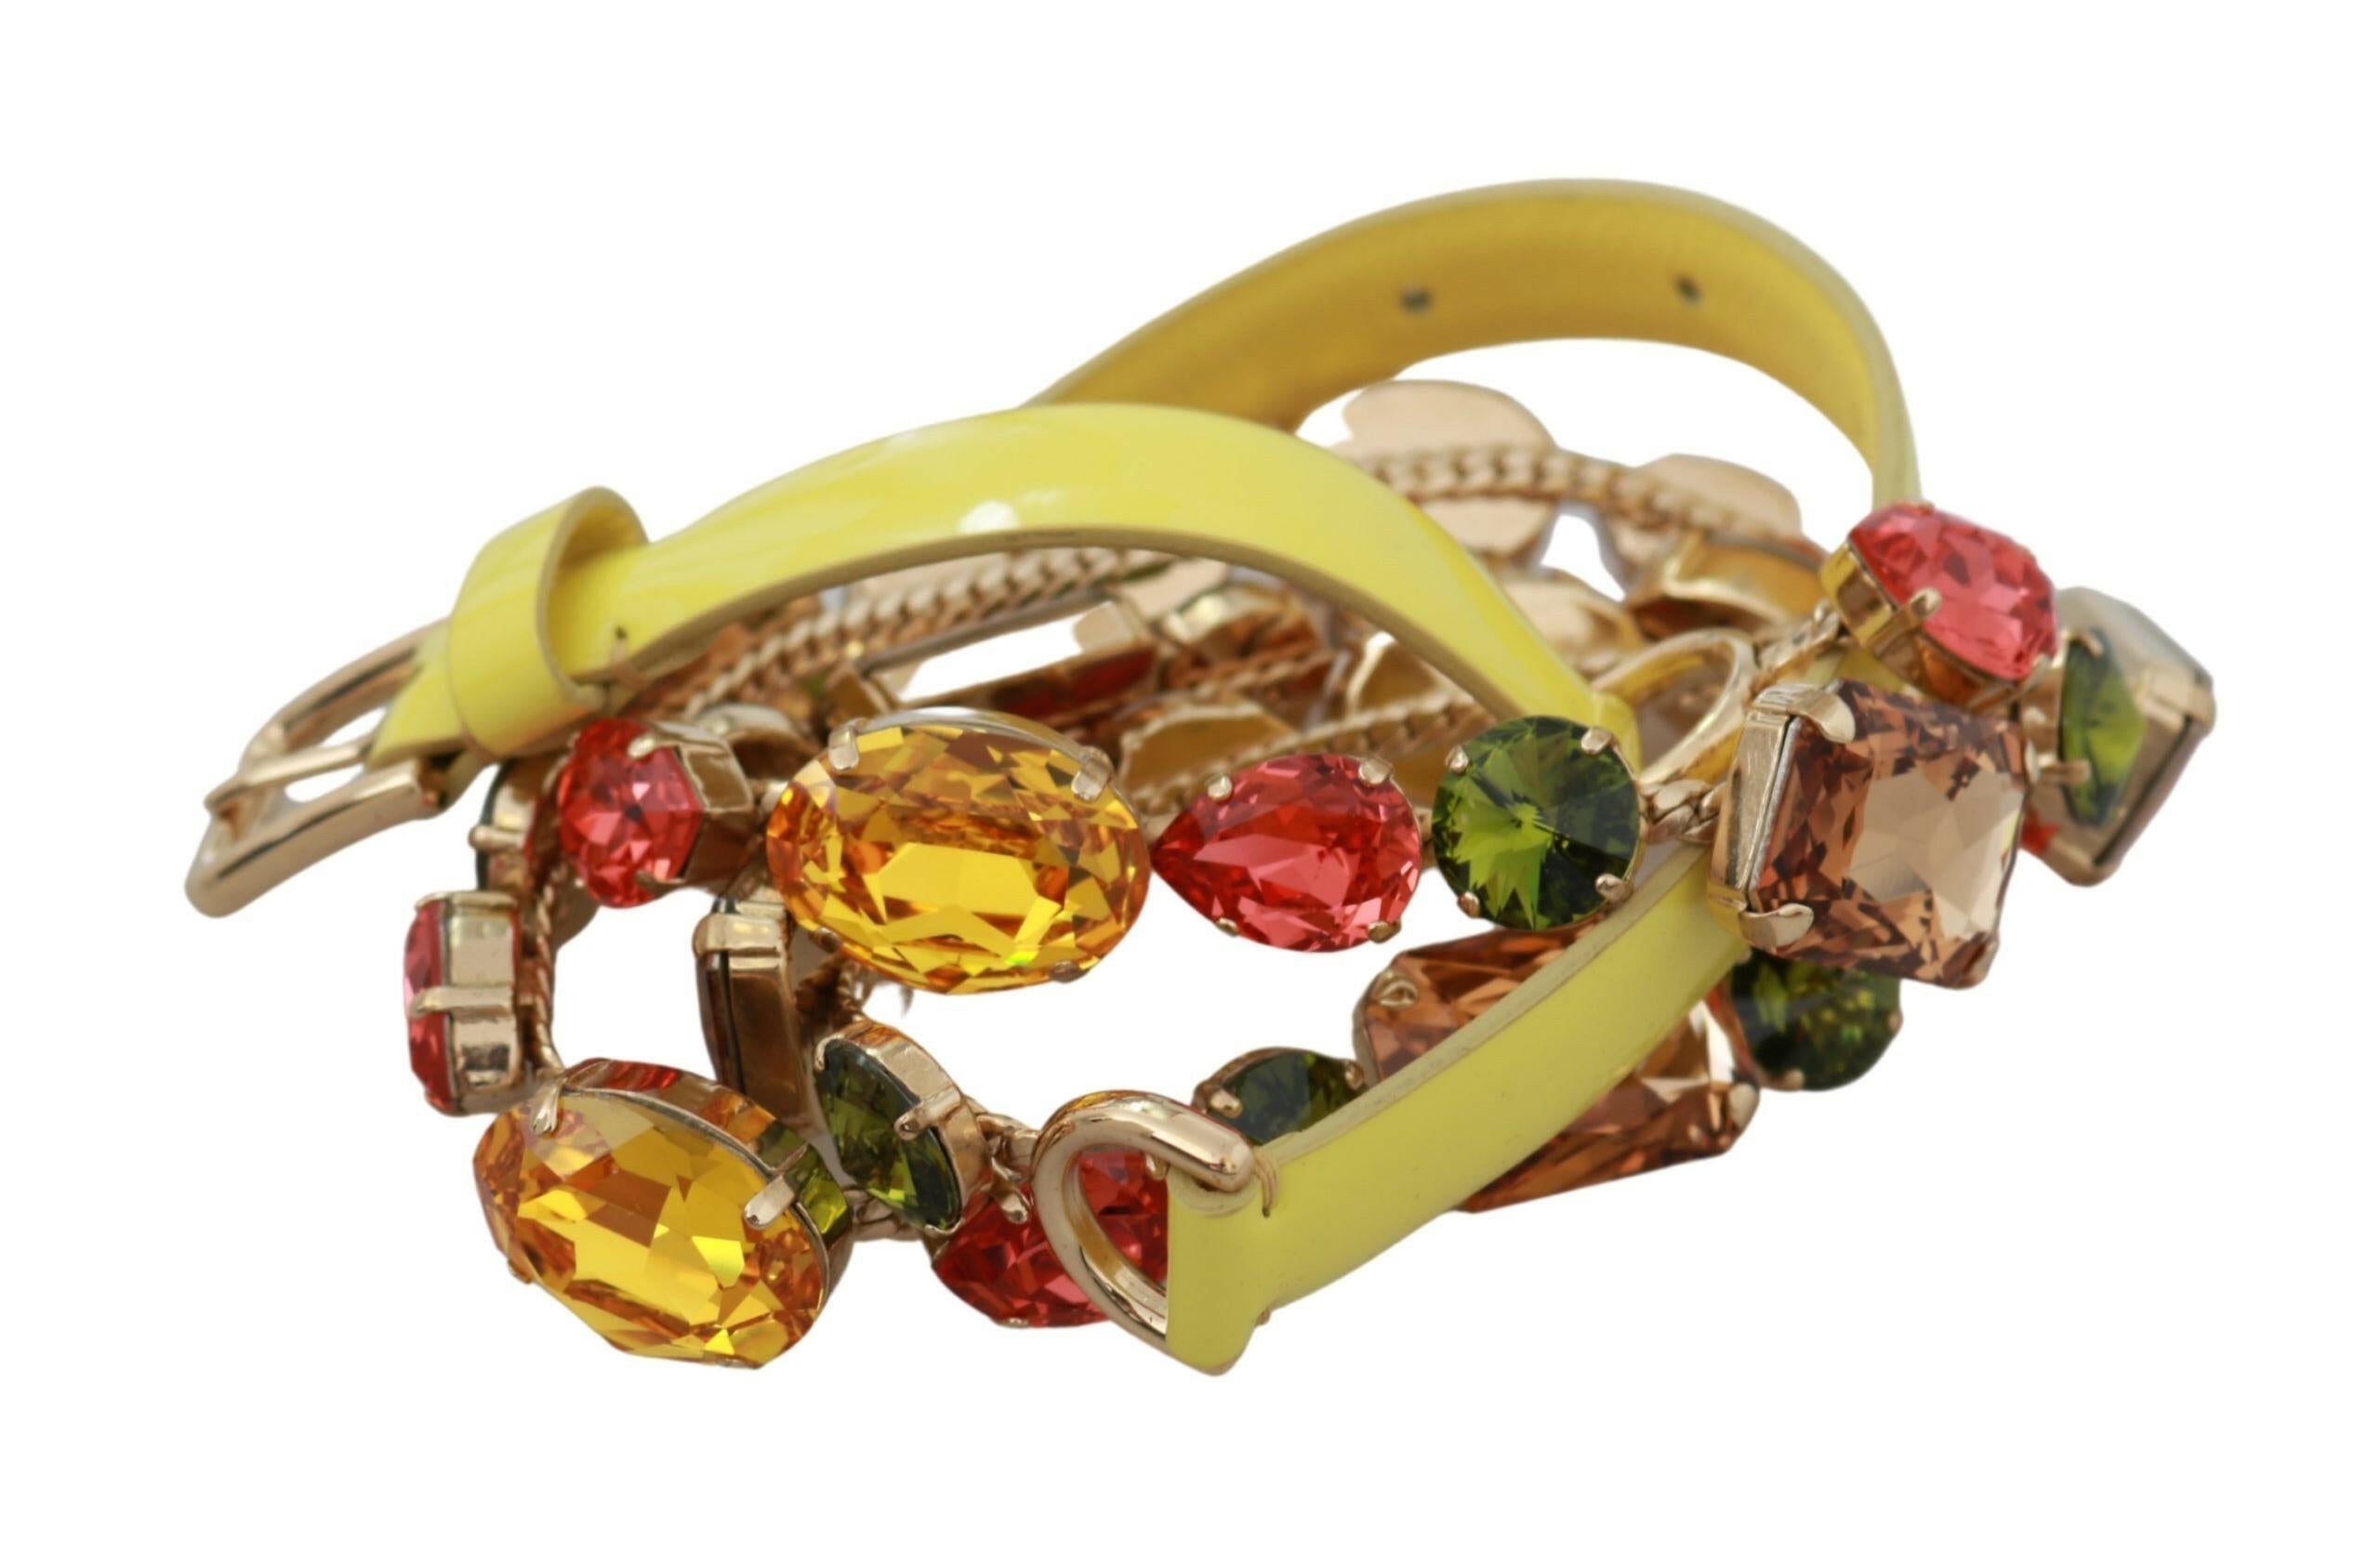 Dolce & Gabbana Yellow Gold Multicolor Crystals Waist Belt - GENUINE AUTHENTIC BRAND LLC  